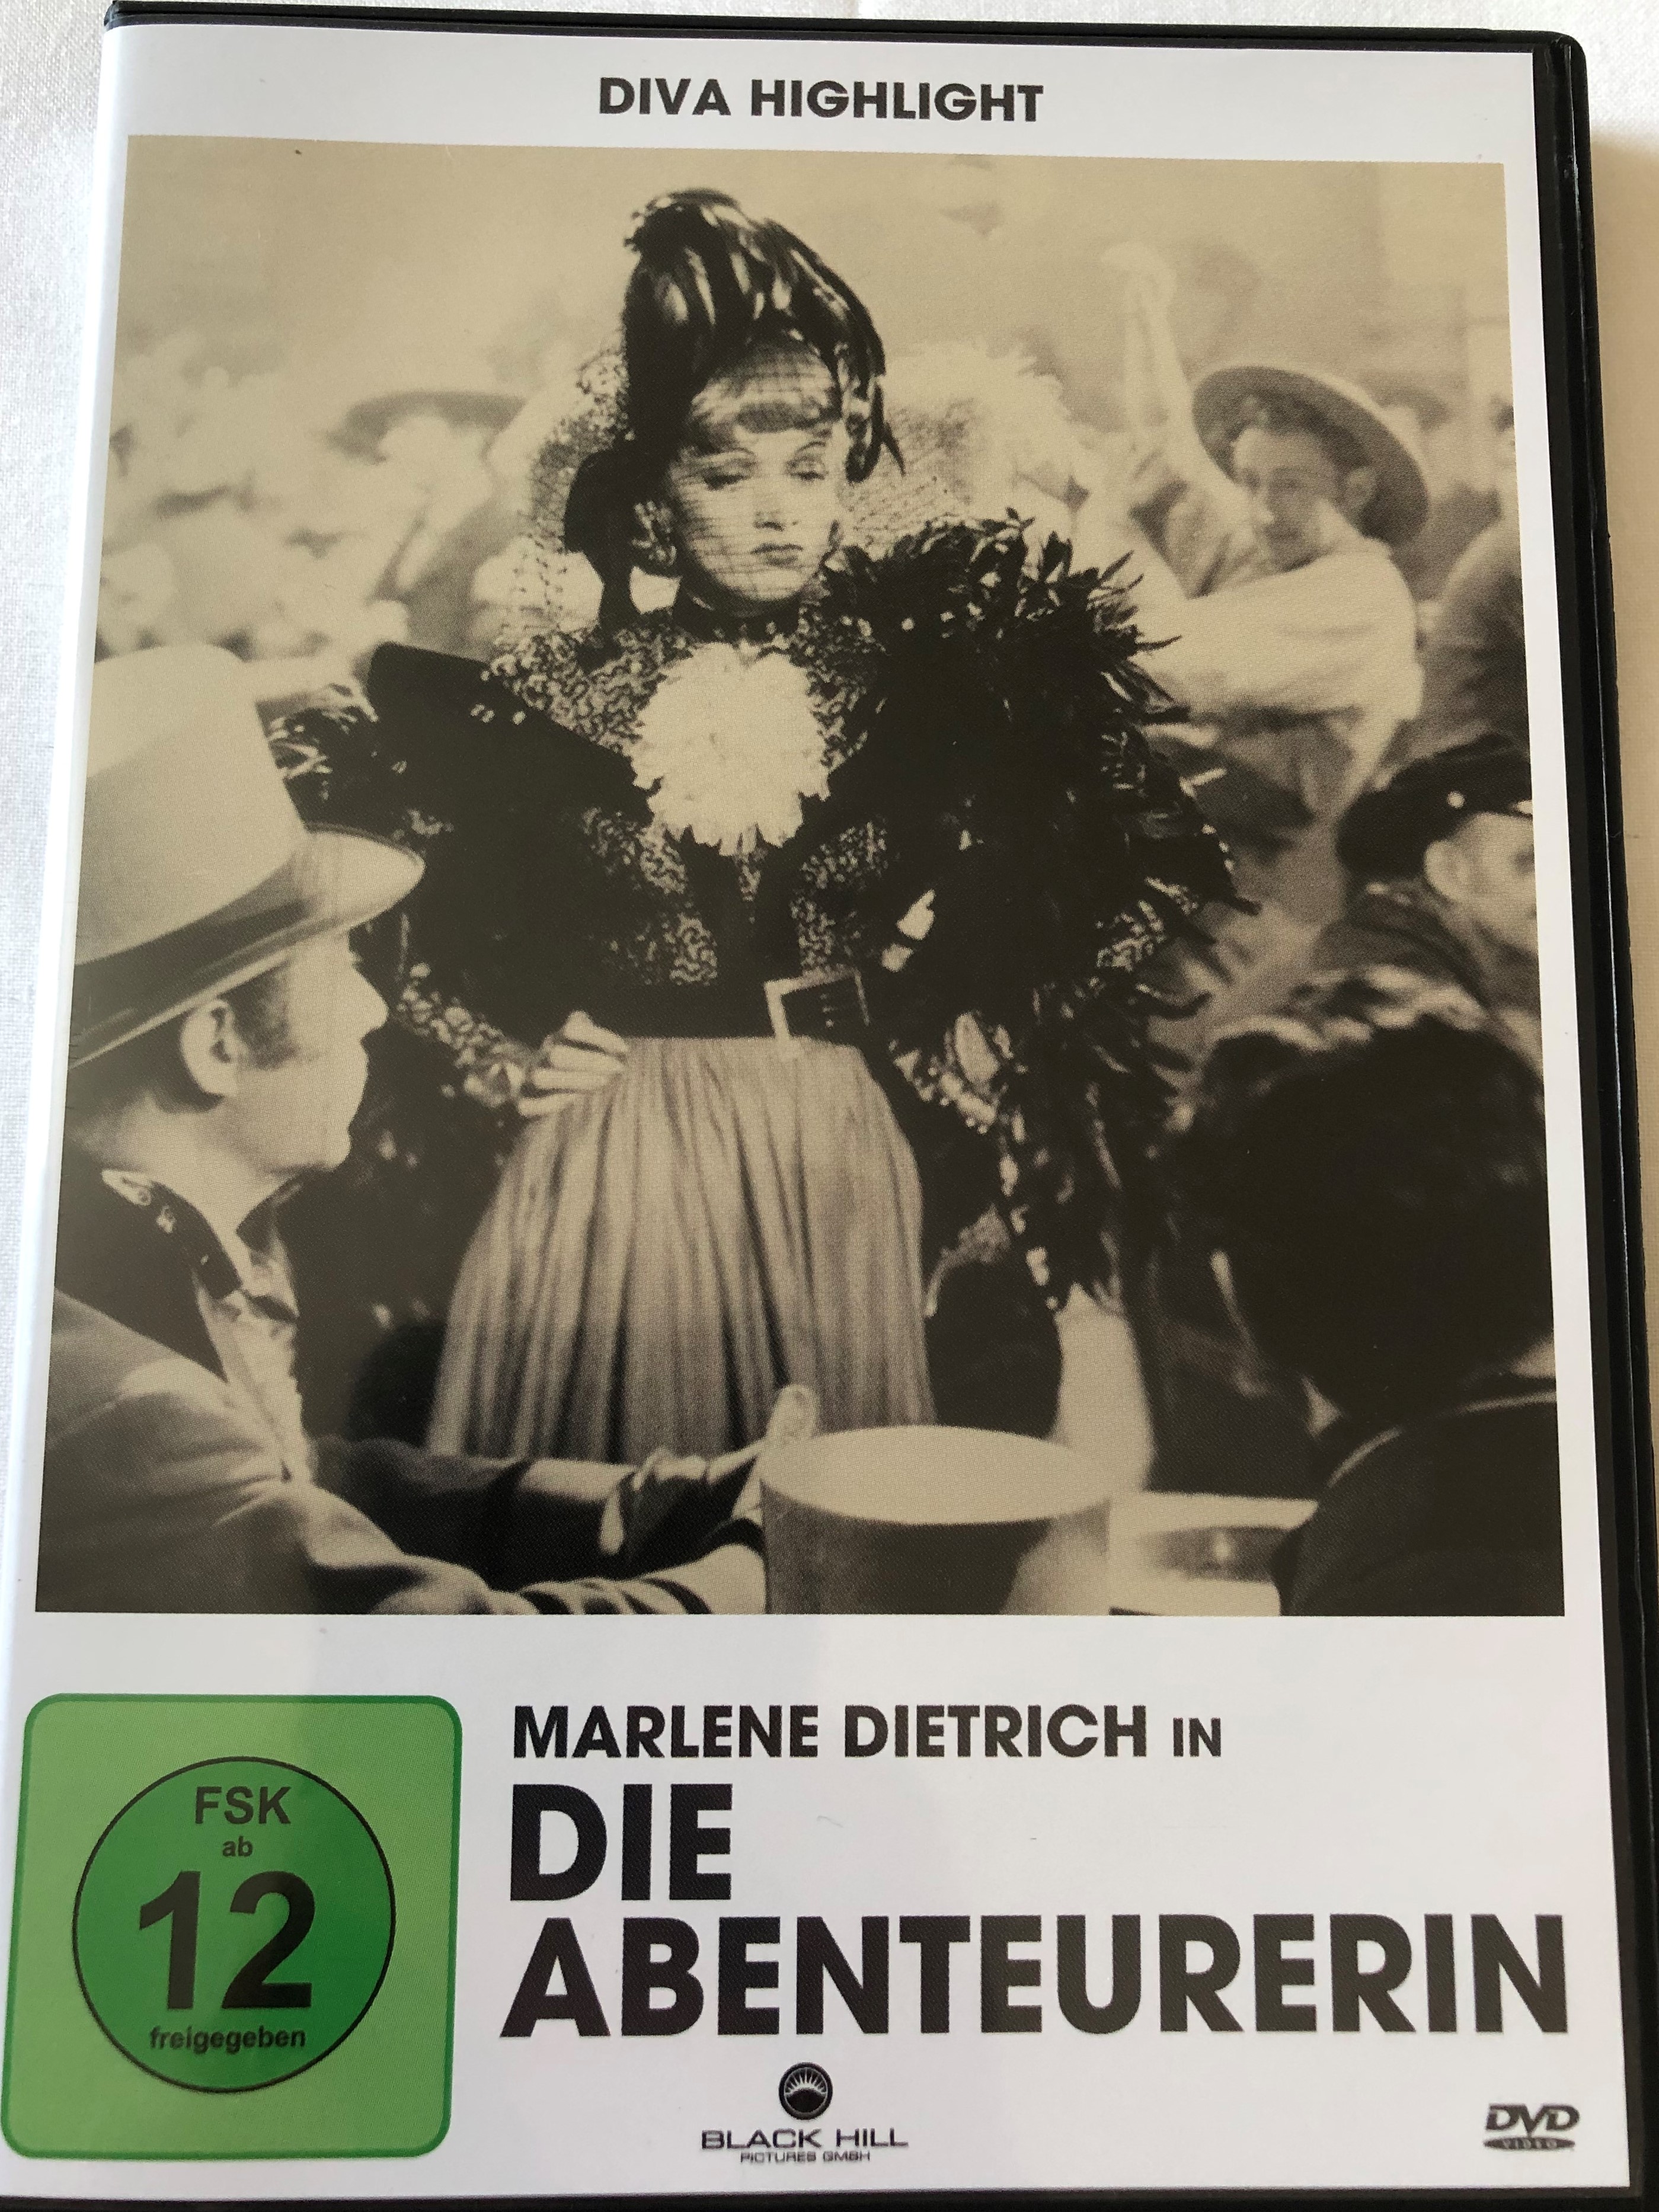 die-abenteurerin-dvd-1941-the-flame-of-new-orleans-directed-by-ren-clair-starring-marlene-dietrich-bruce-cabot-roland-young-mischa-auer-andy-devine-eddie-quillan-anne-revere-diva-highlight-1-.jpg